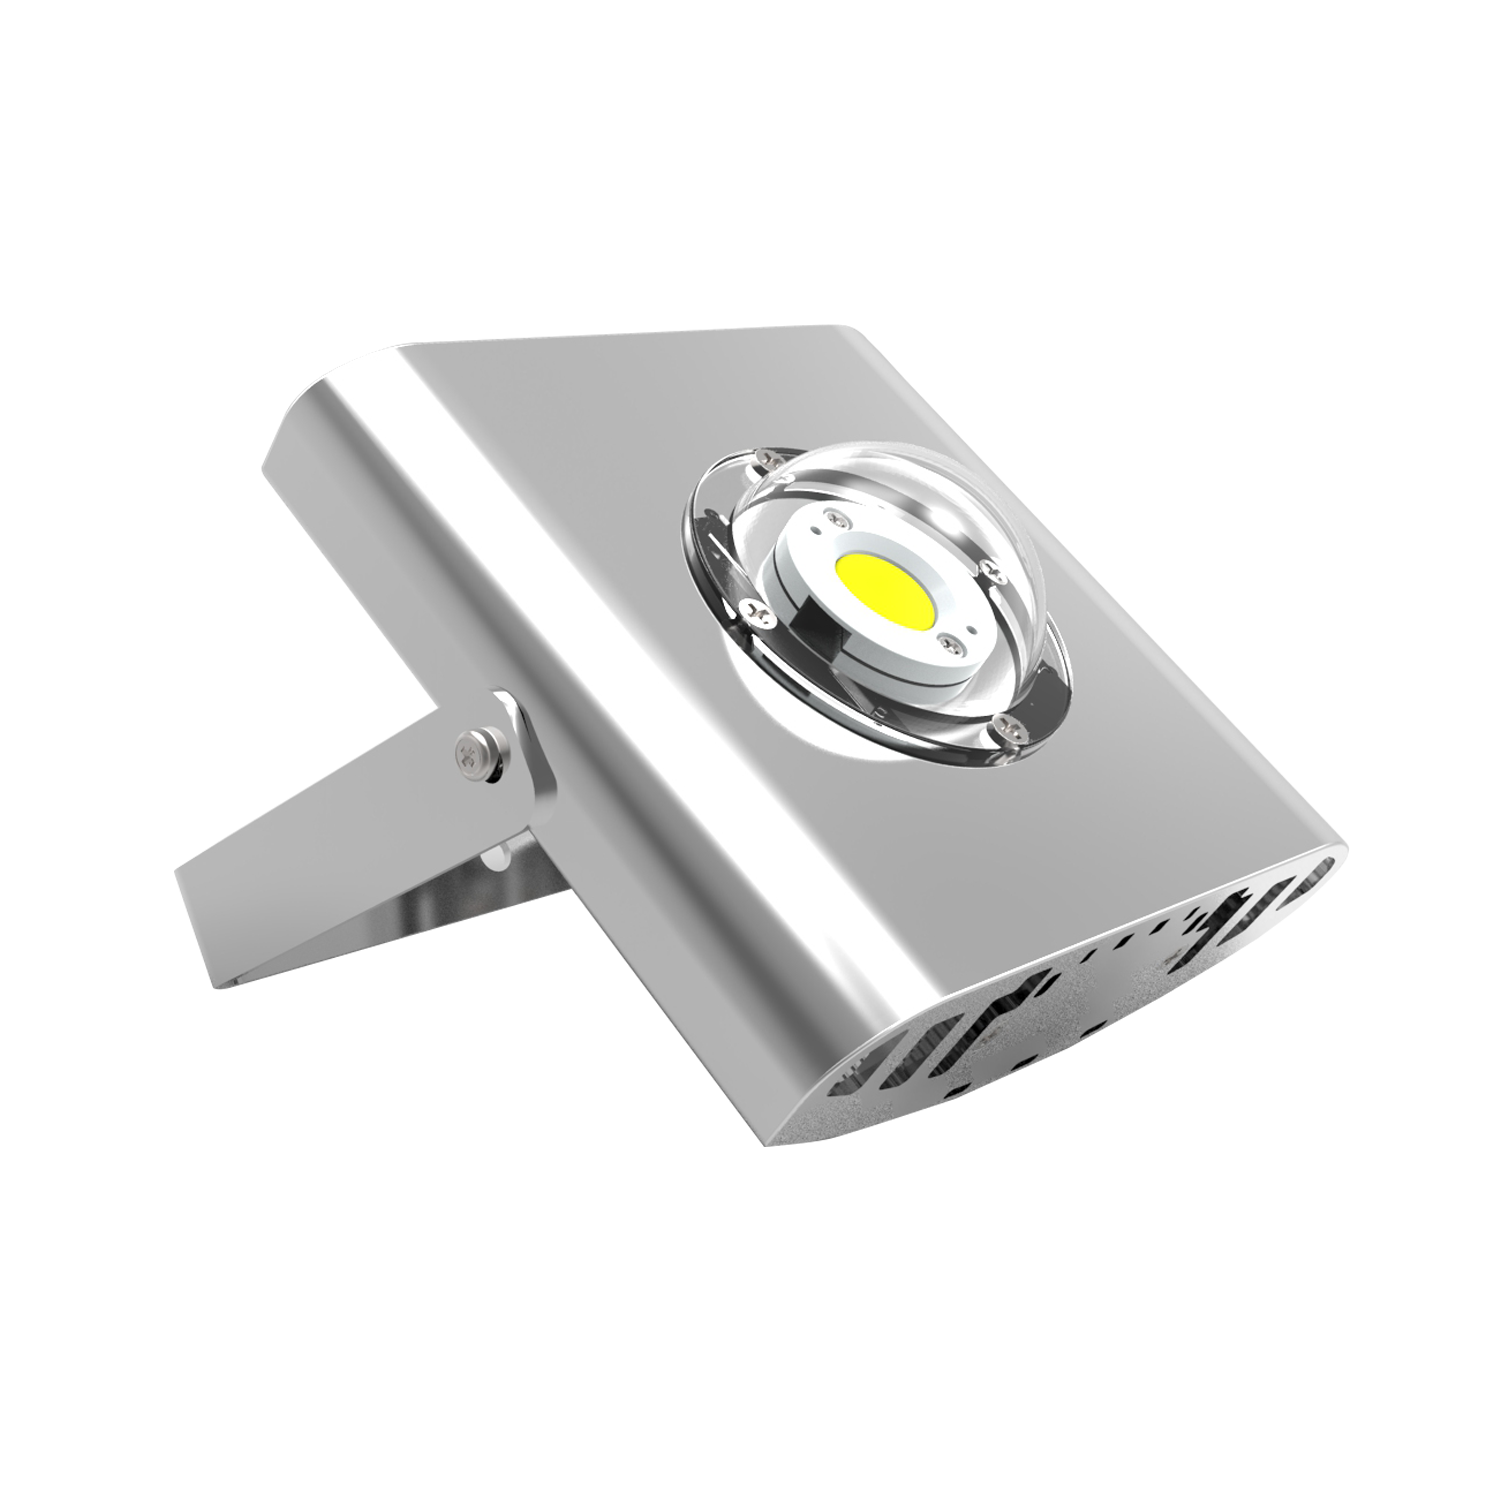 Aigostar - Confezione da 5 Faretto a LED COB，30W, 2700LM，Impermeabile IP65, Luce Naturale 4000K[Classe di efficienza energetica A+]